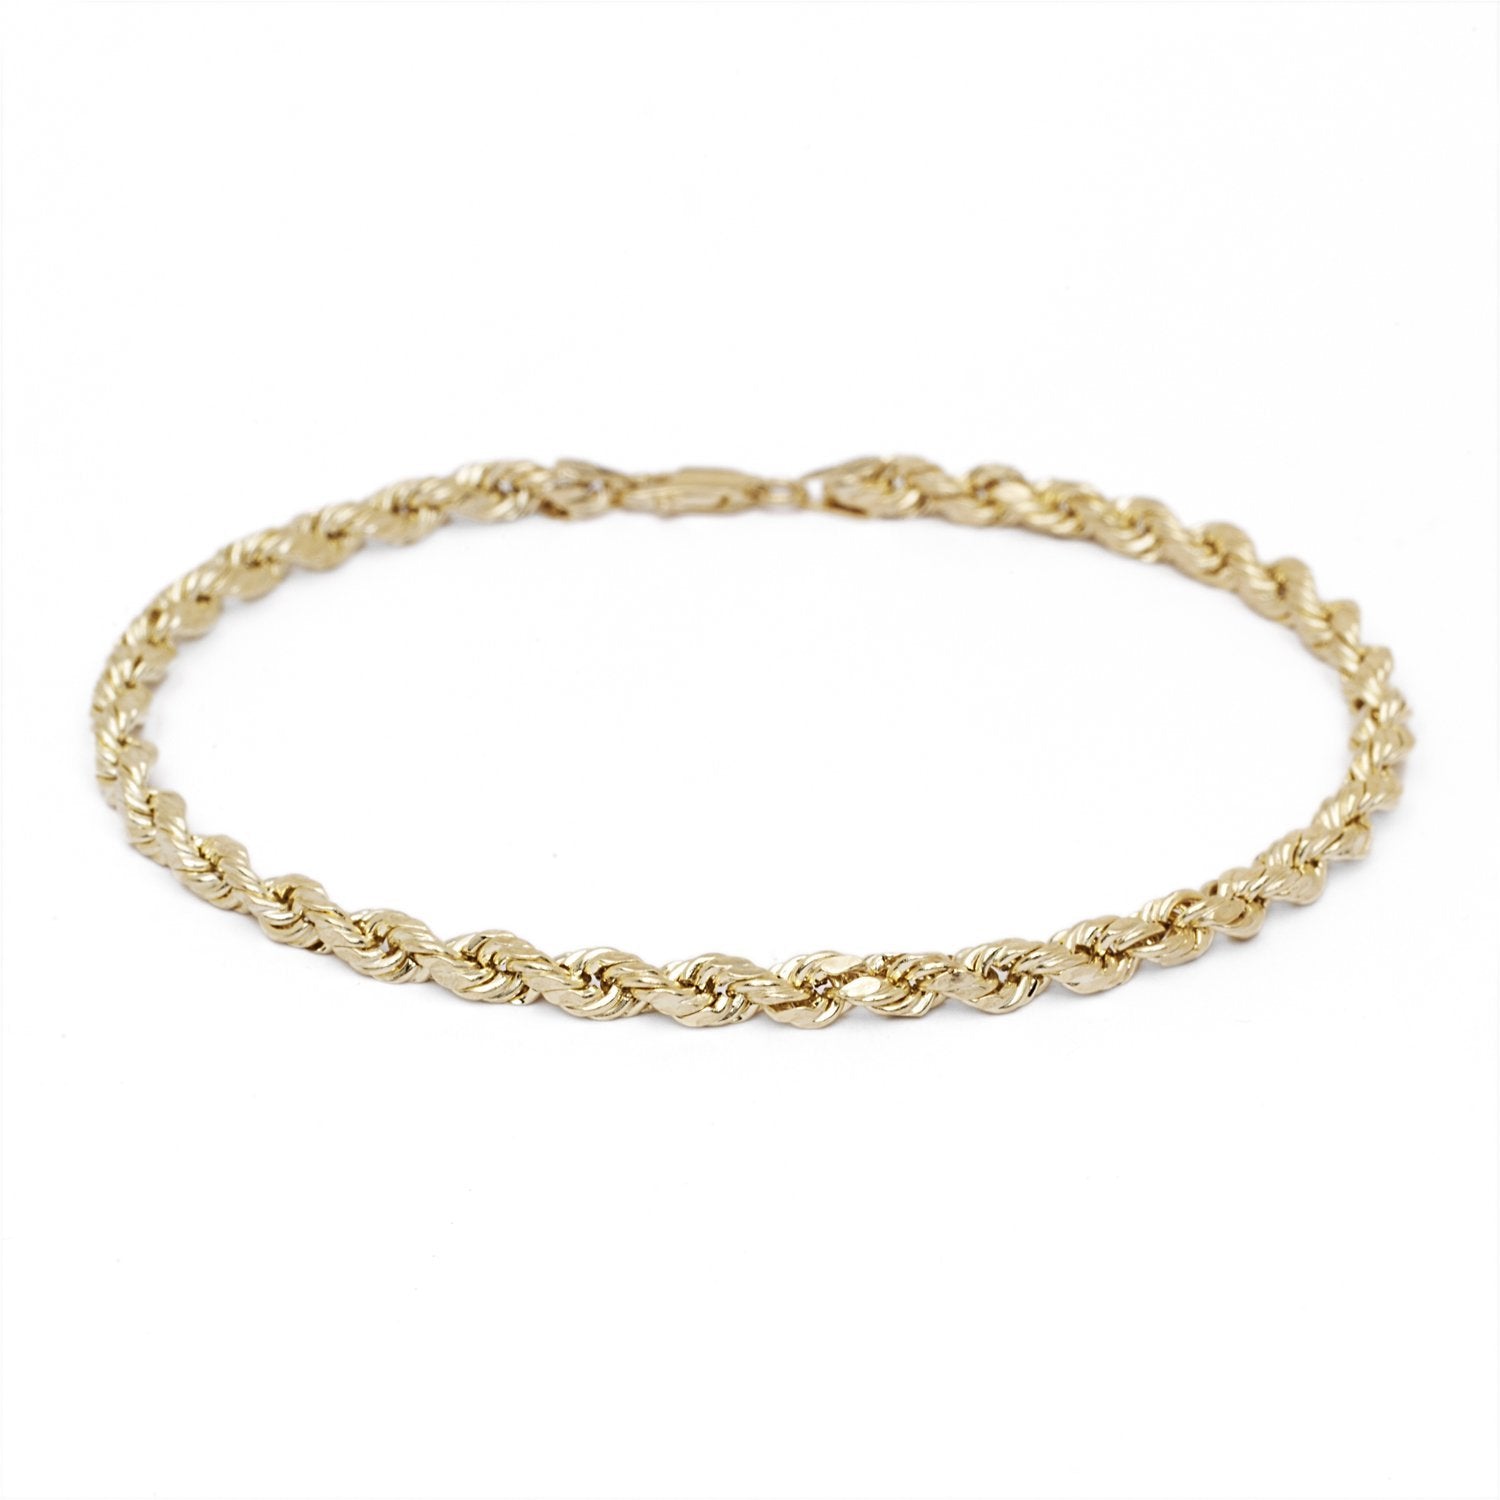 Fine yellow gold rope bracelet